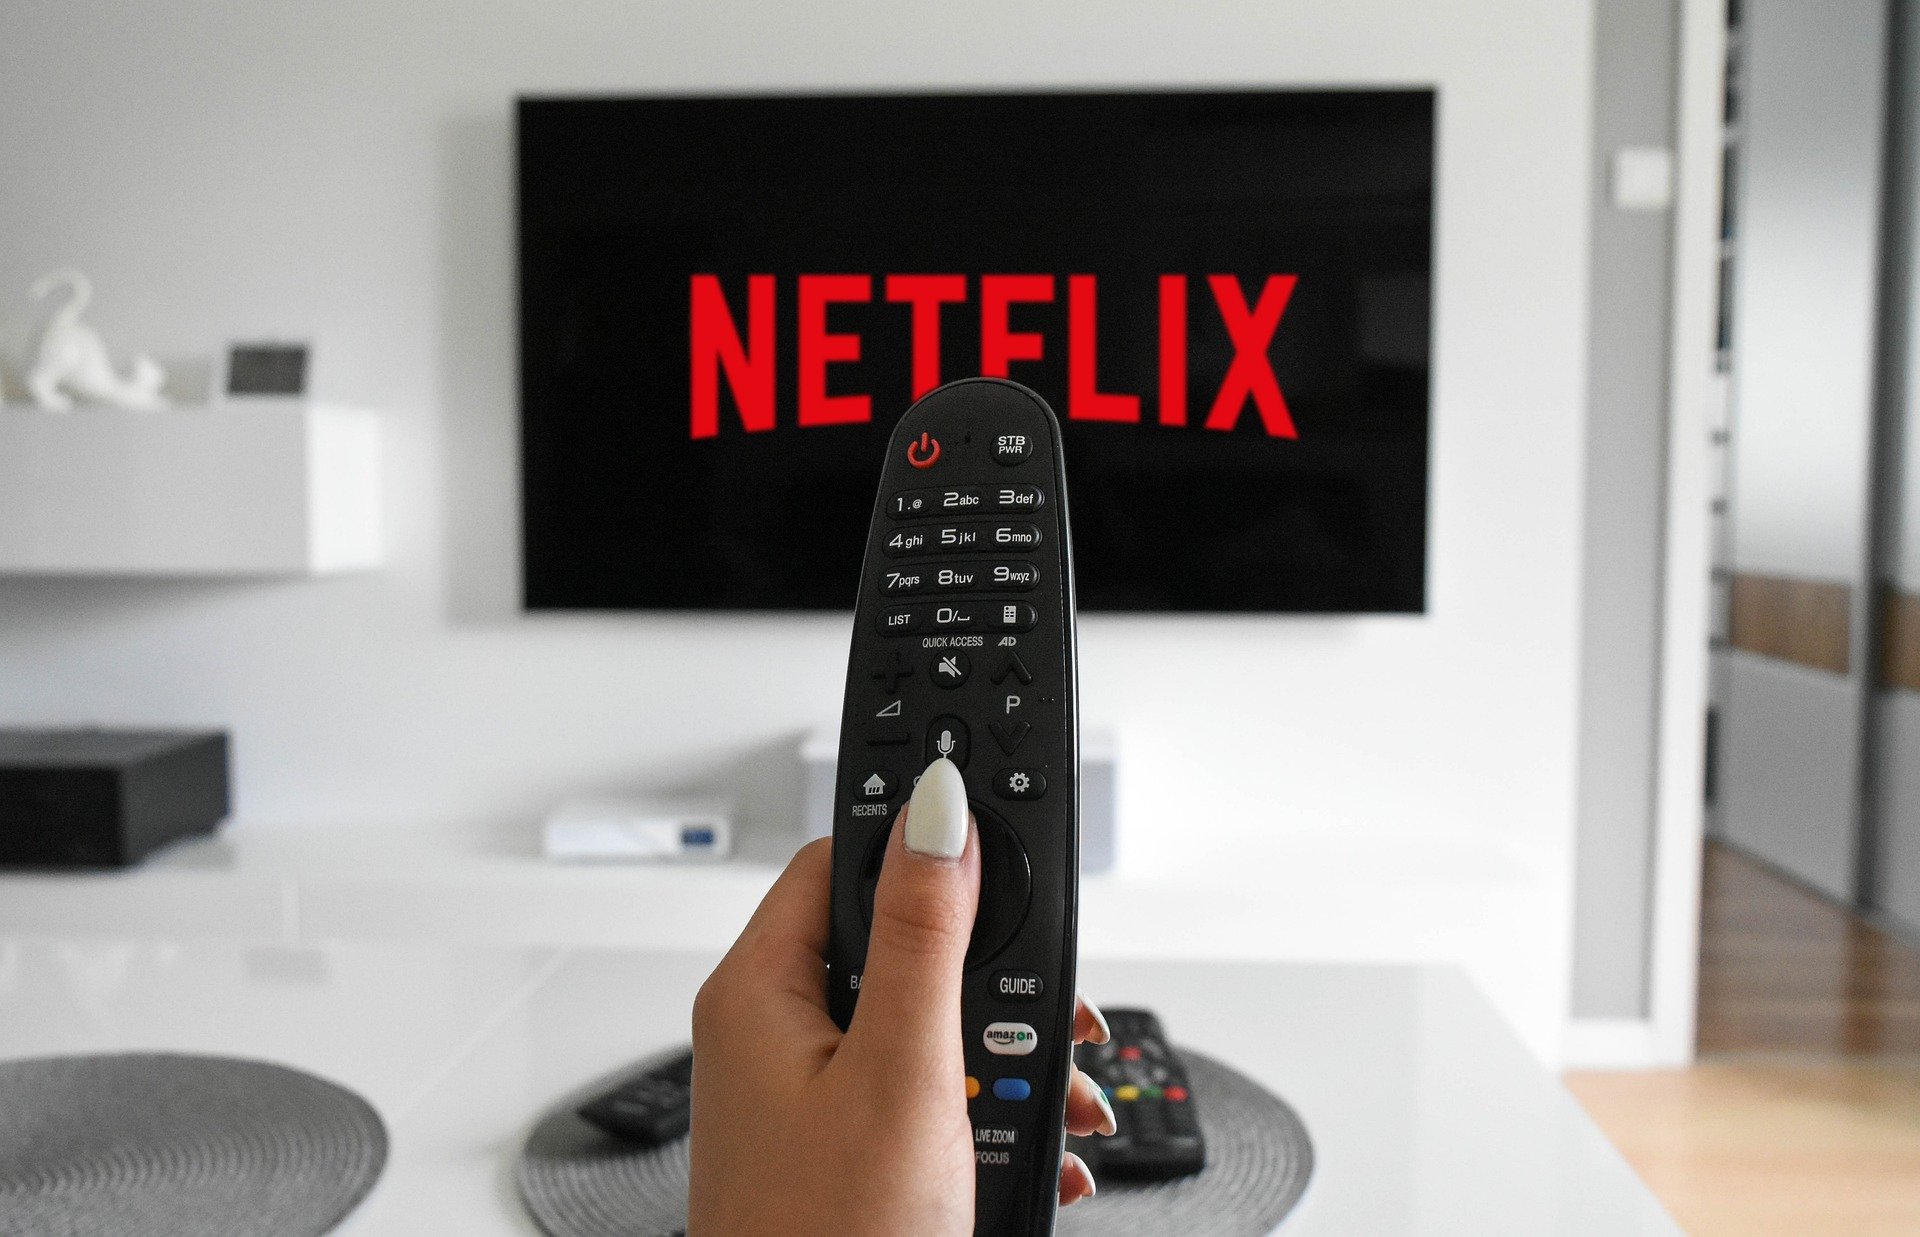 Акции Netflix подскочили в цене после отчета компании